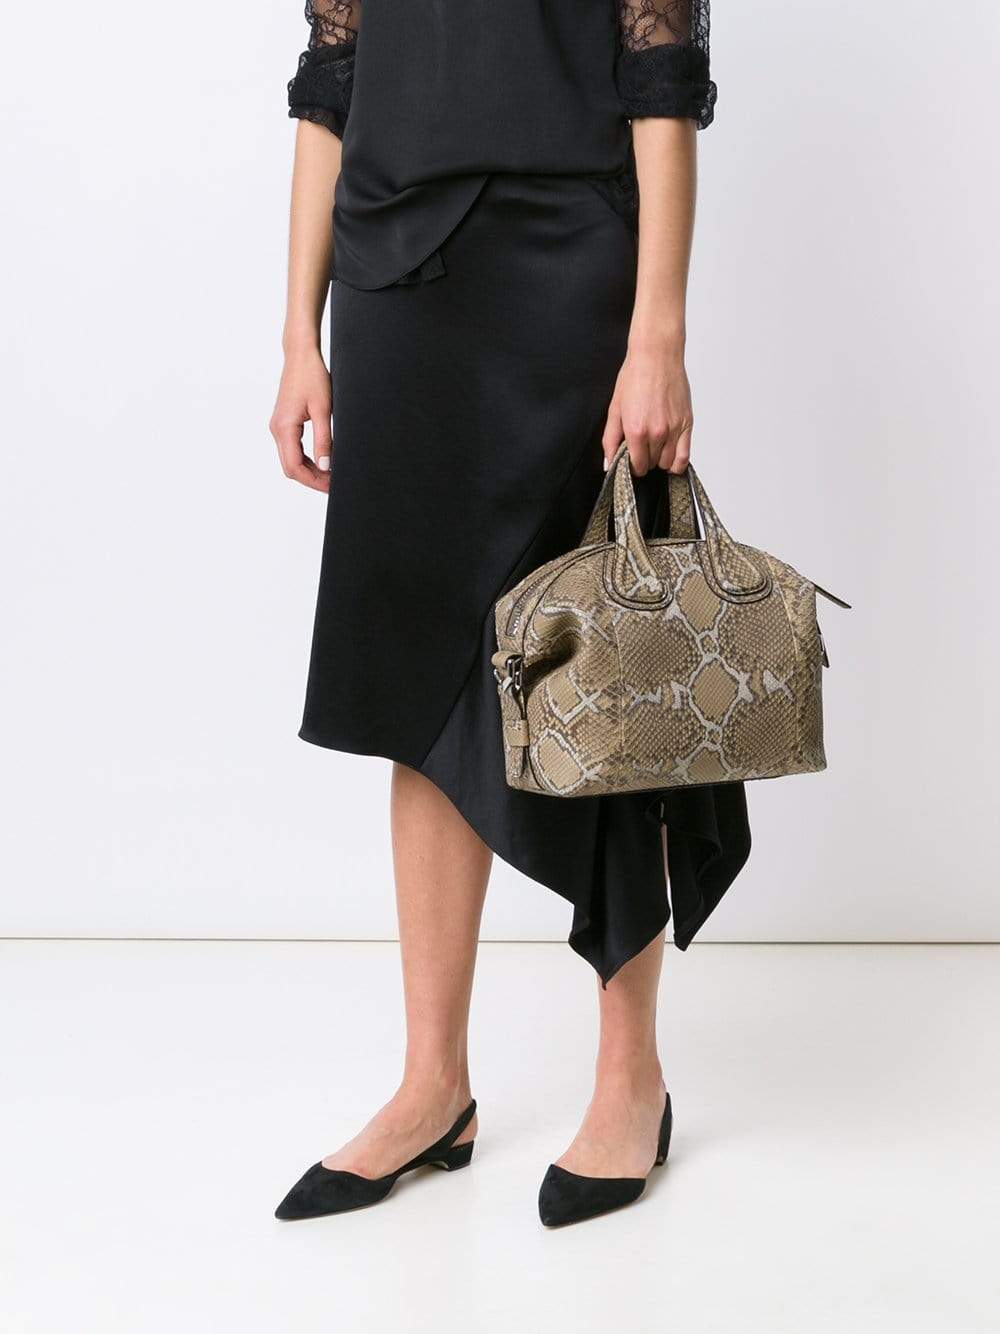 Authentic Givenchy Nightingale leather 2 way bag. | eBay